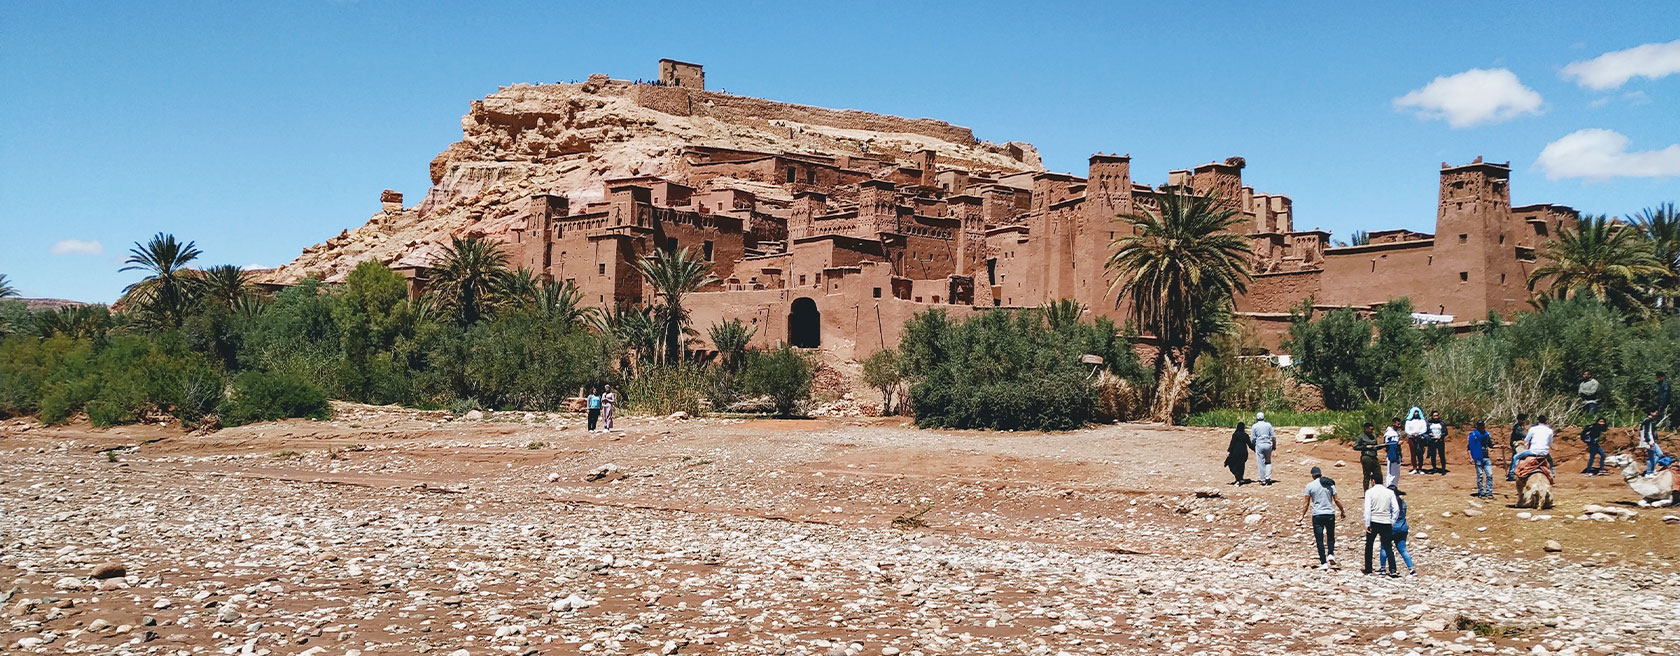 excursion ait ben haddou and ouarzazate from marrakech